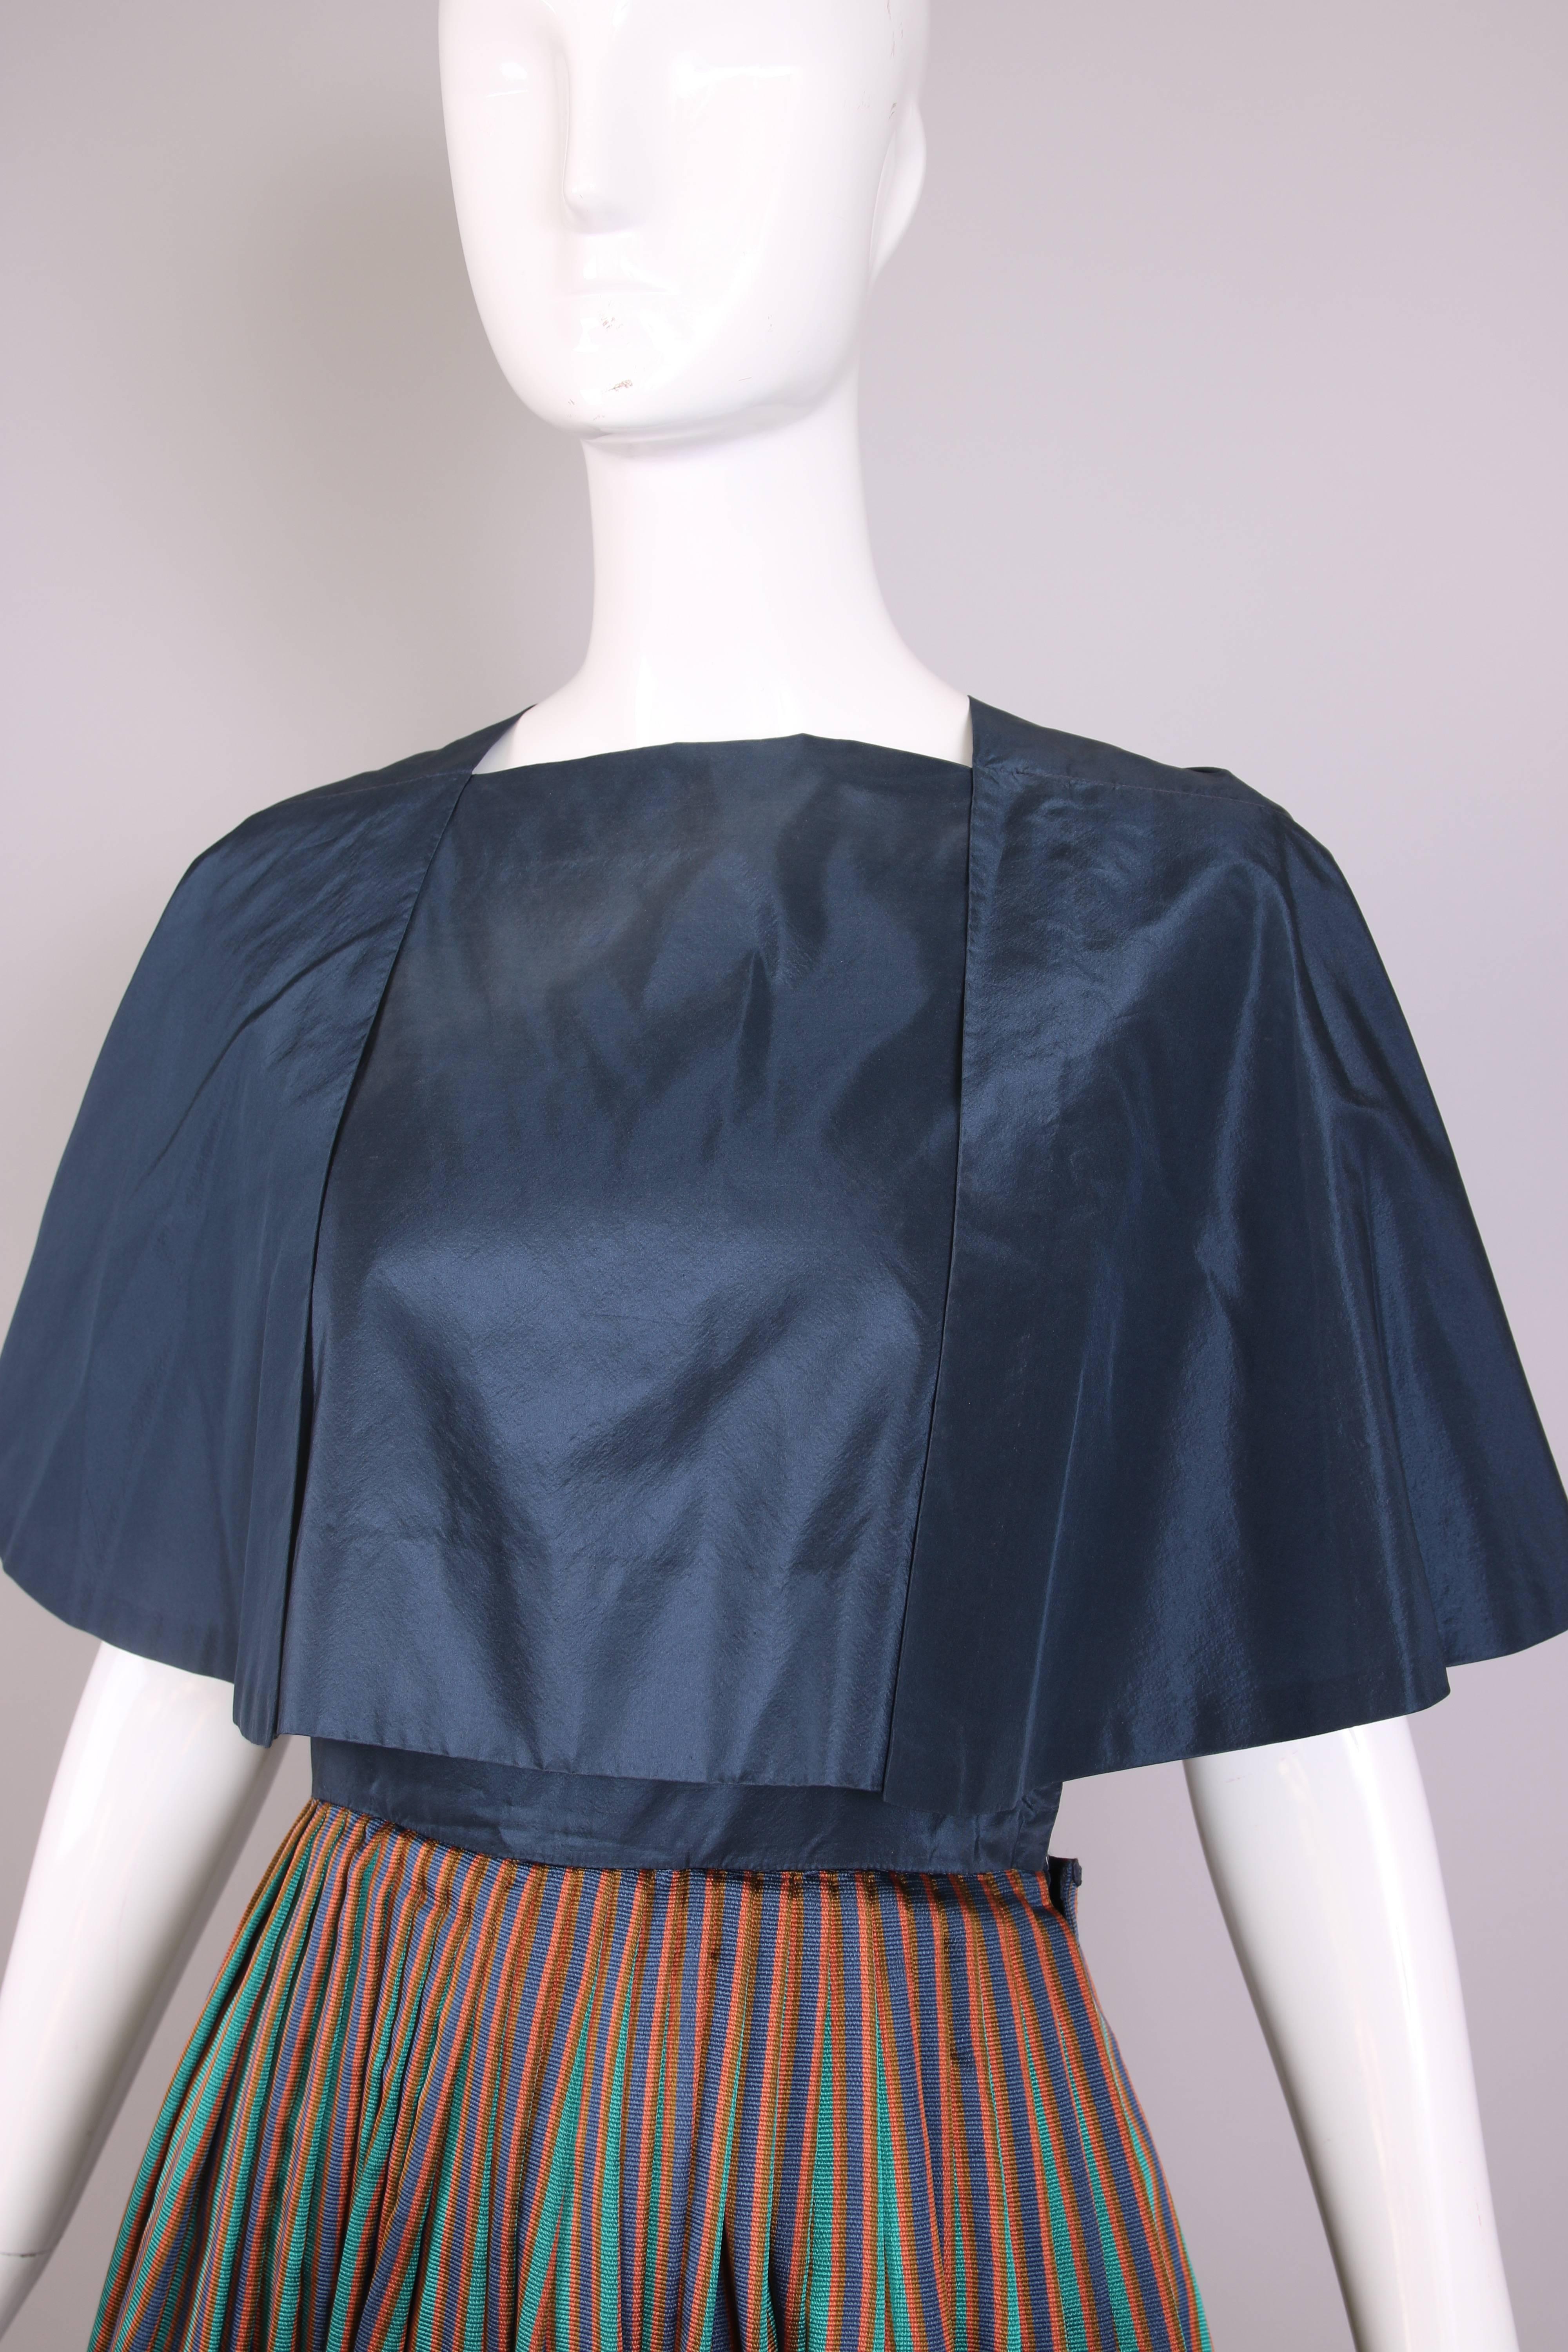 Gray 1983 Madame Gres Haute Couture Blue & Striped Taffeta Cocktail Dress W/Capelet For Sale